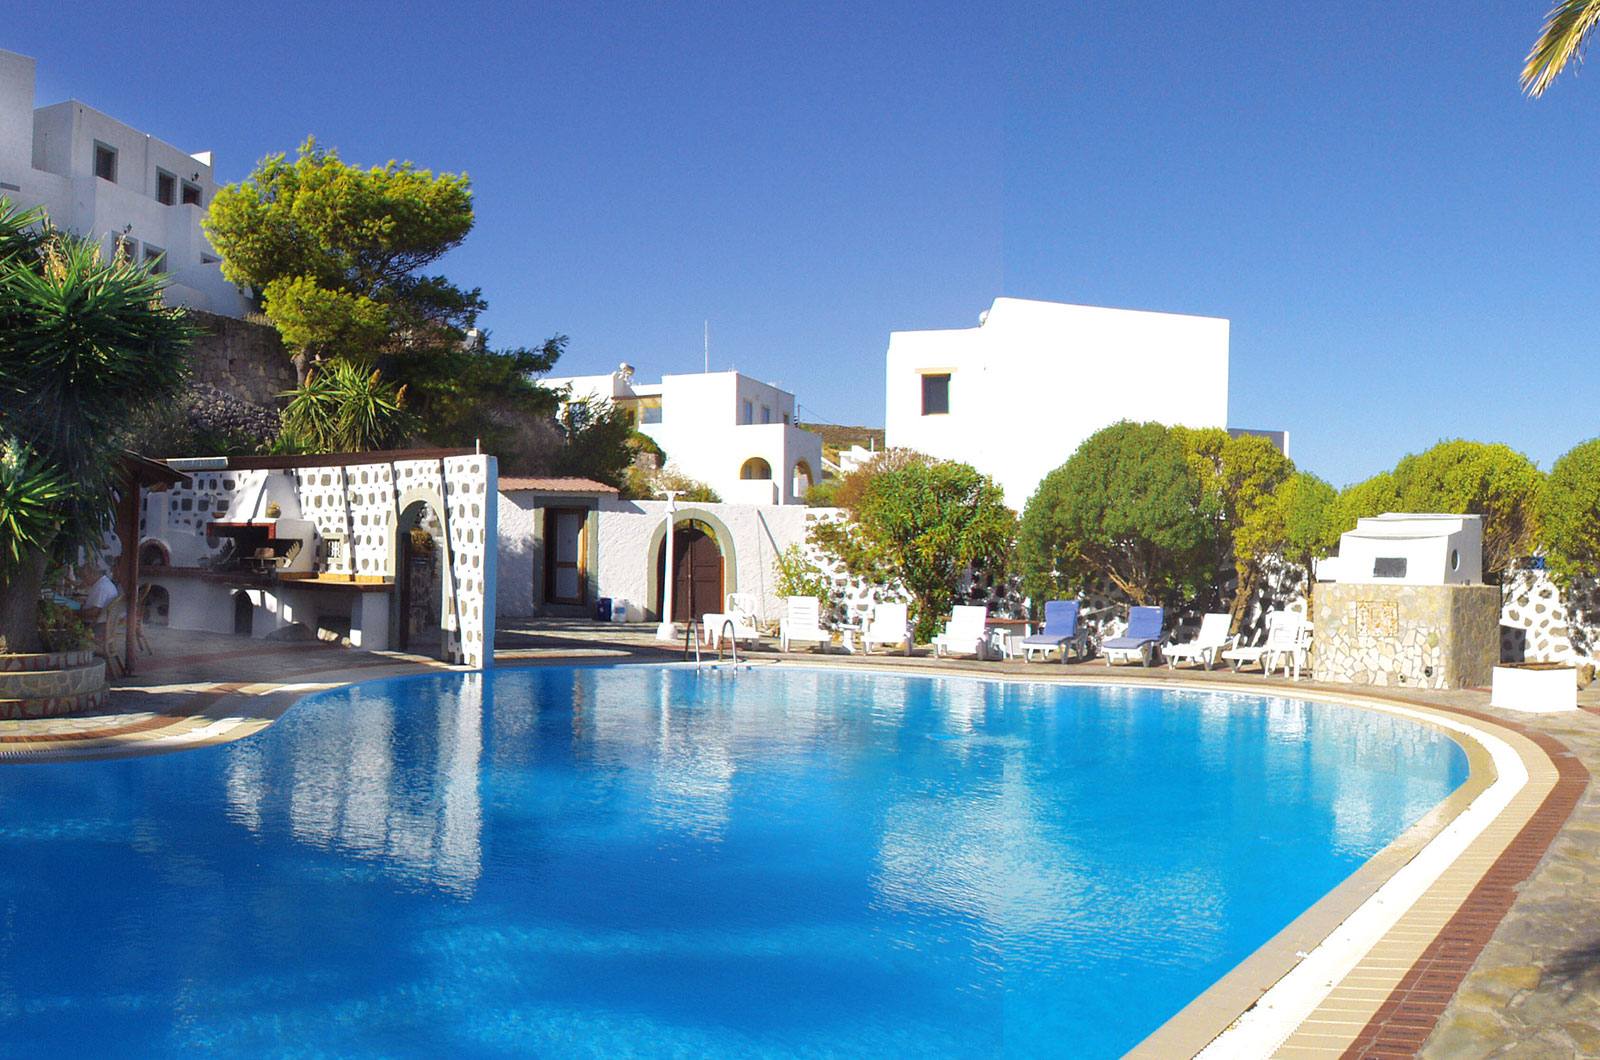 Anamar Patmos Hotel - Πάτμος ✦ 2 Ημέρες (1 Διανυκτέρευση) ✦ 2 άτομα ✦ 2 ✦ 01/06/2022 έως 30/09/2022 ✦ Θαυμάσια Τοποθεσία!